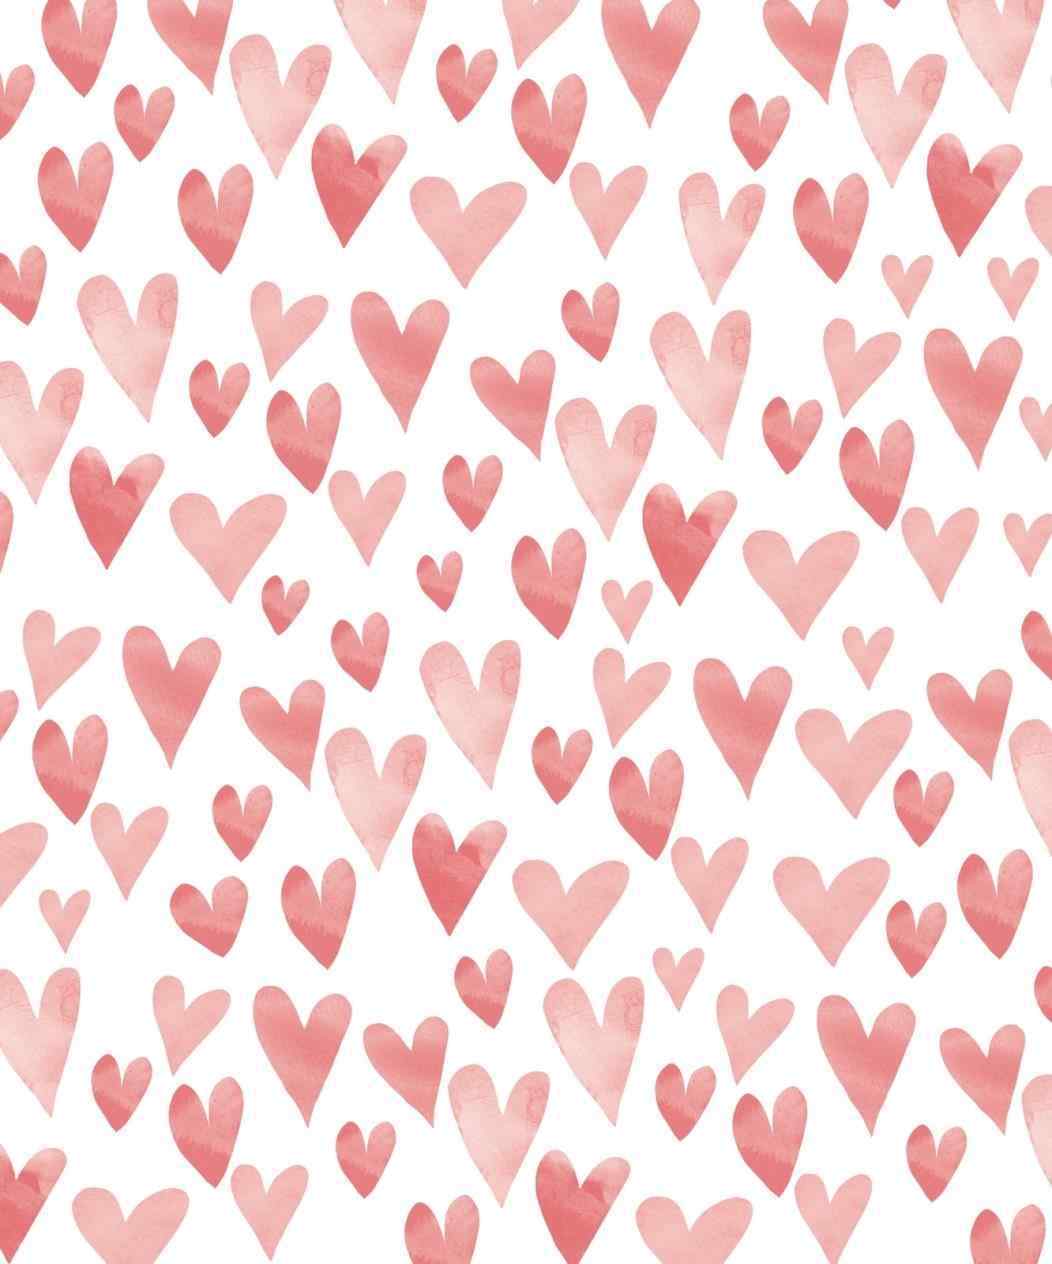 Pastel Hearts Wallpaper Free .wallpaperaccess.com